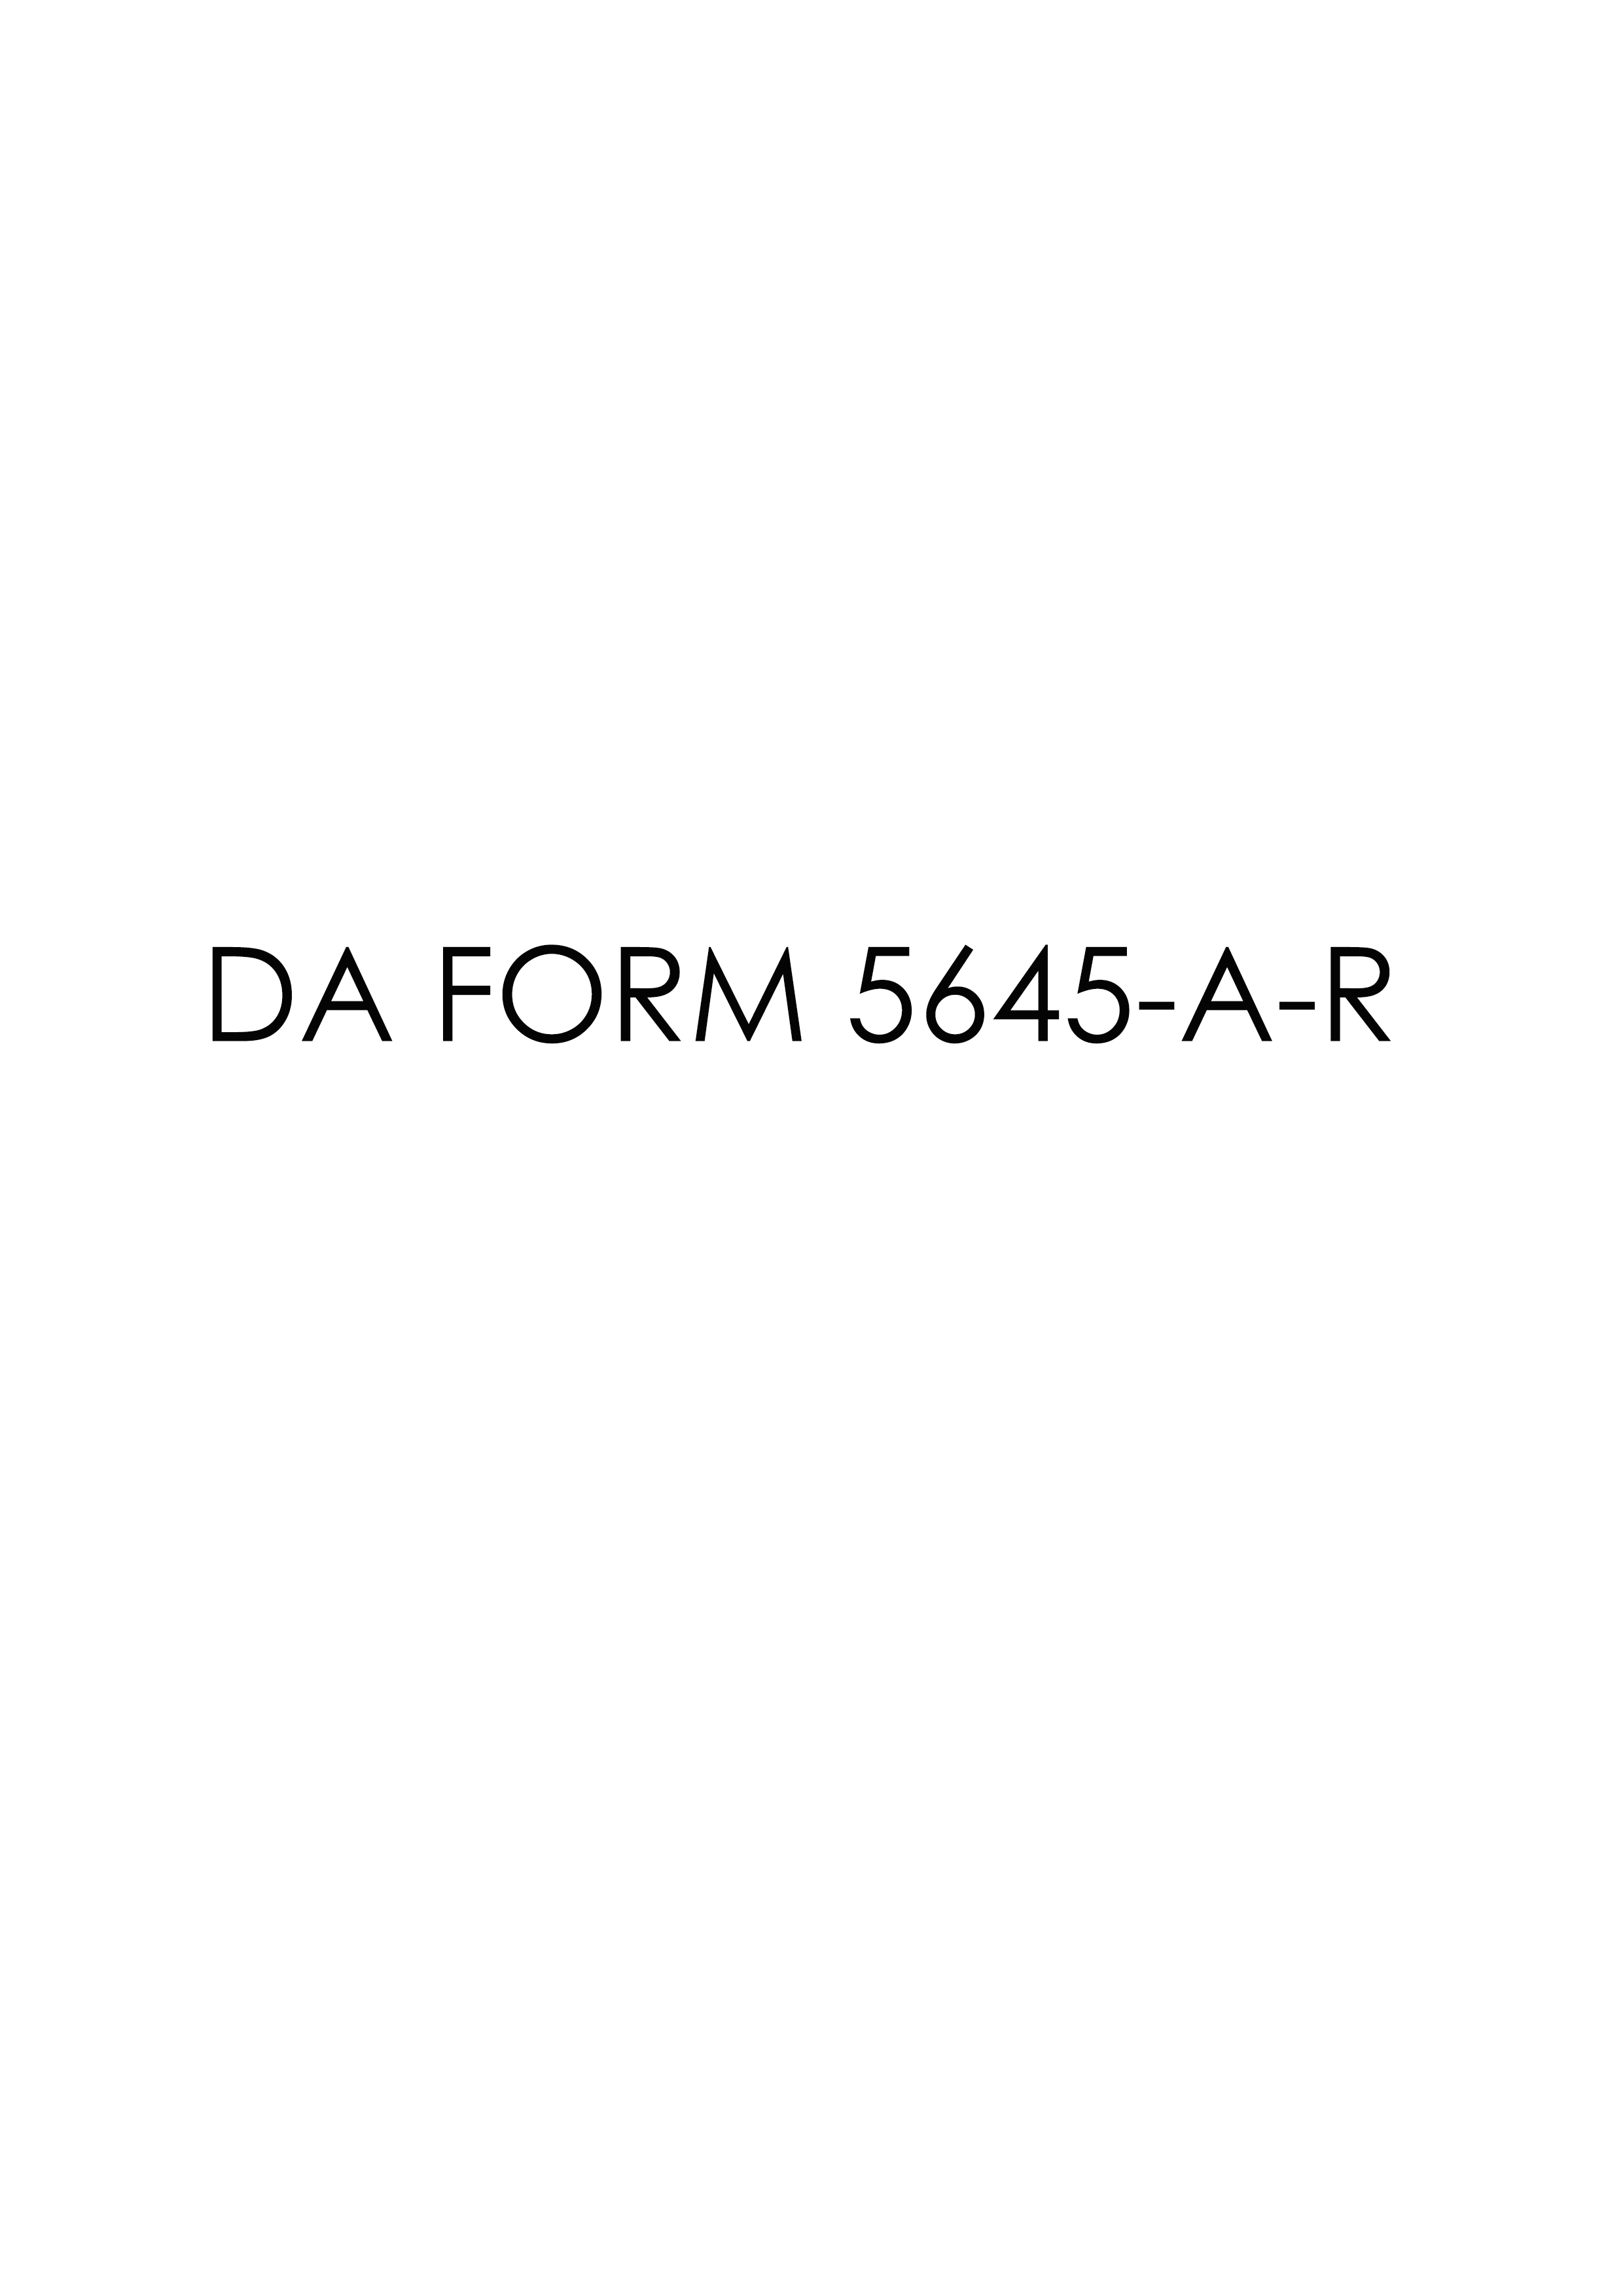 da Form 5645-A-R fillable